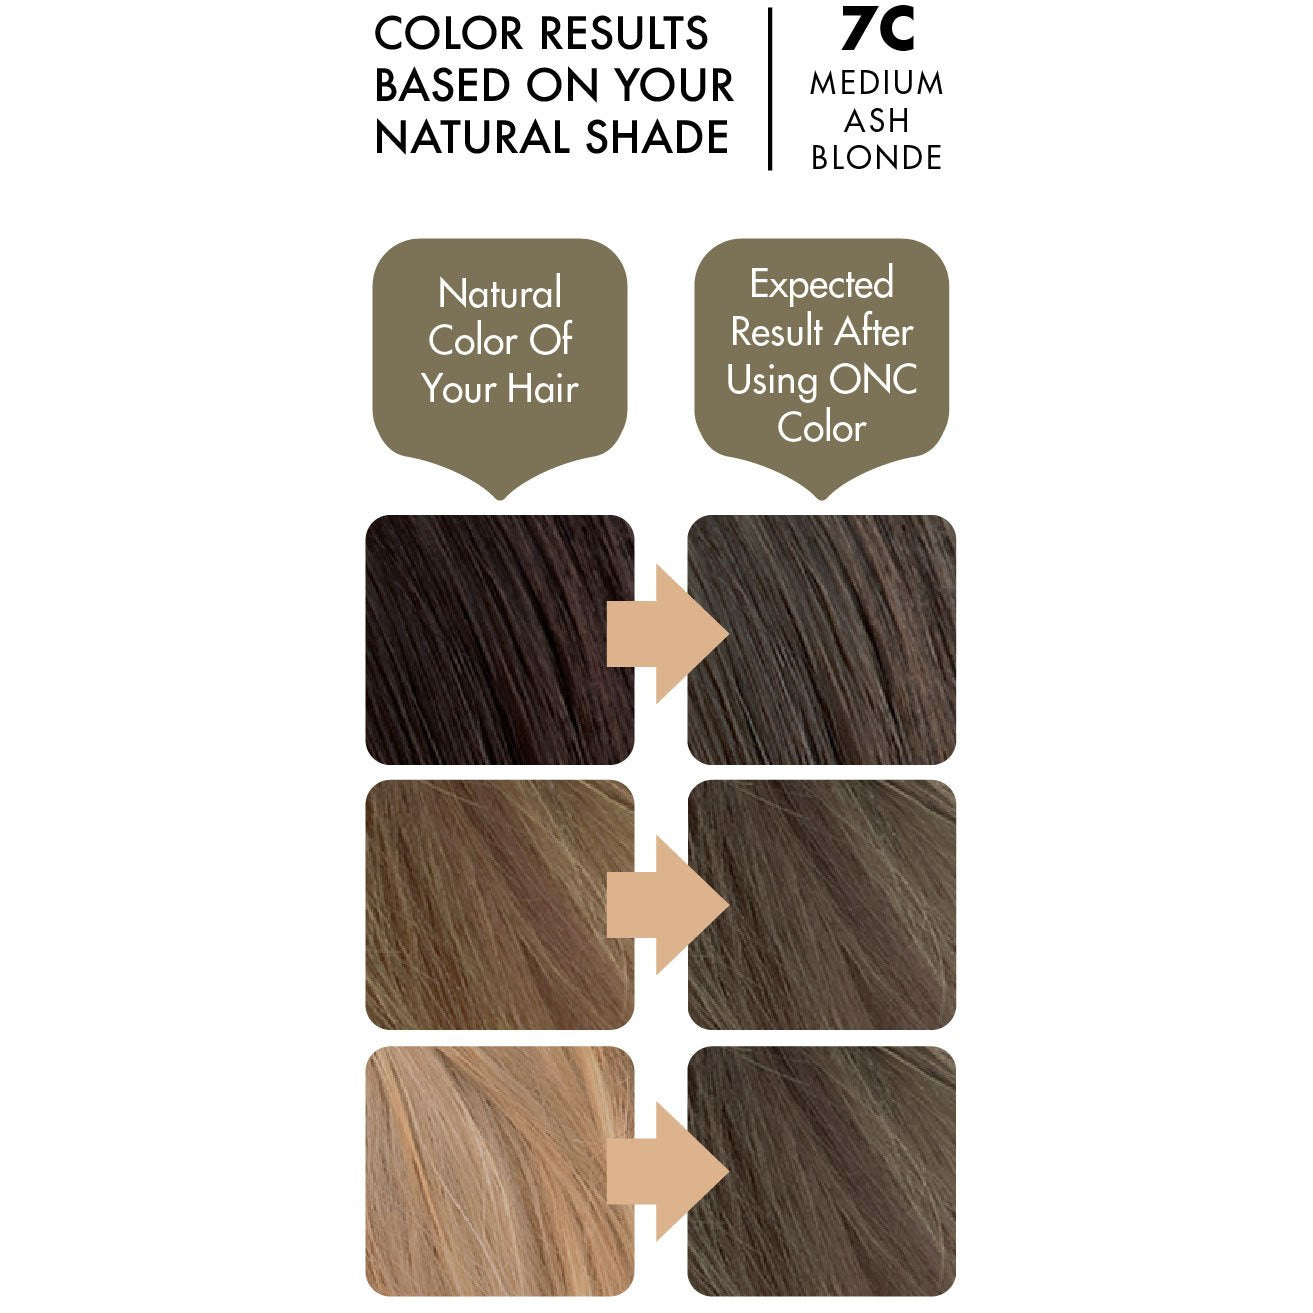 7C Medium Ash Blonde Heat Activated Hair Dye With Organic Ingredients - 120 ml (4 fl. oz)